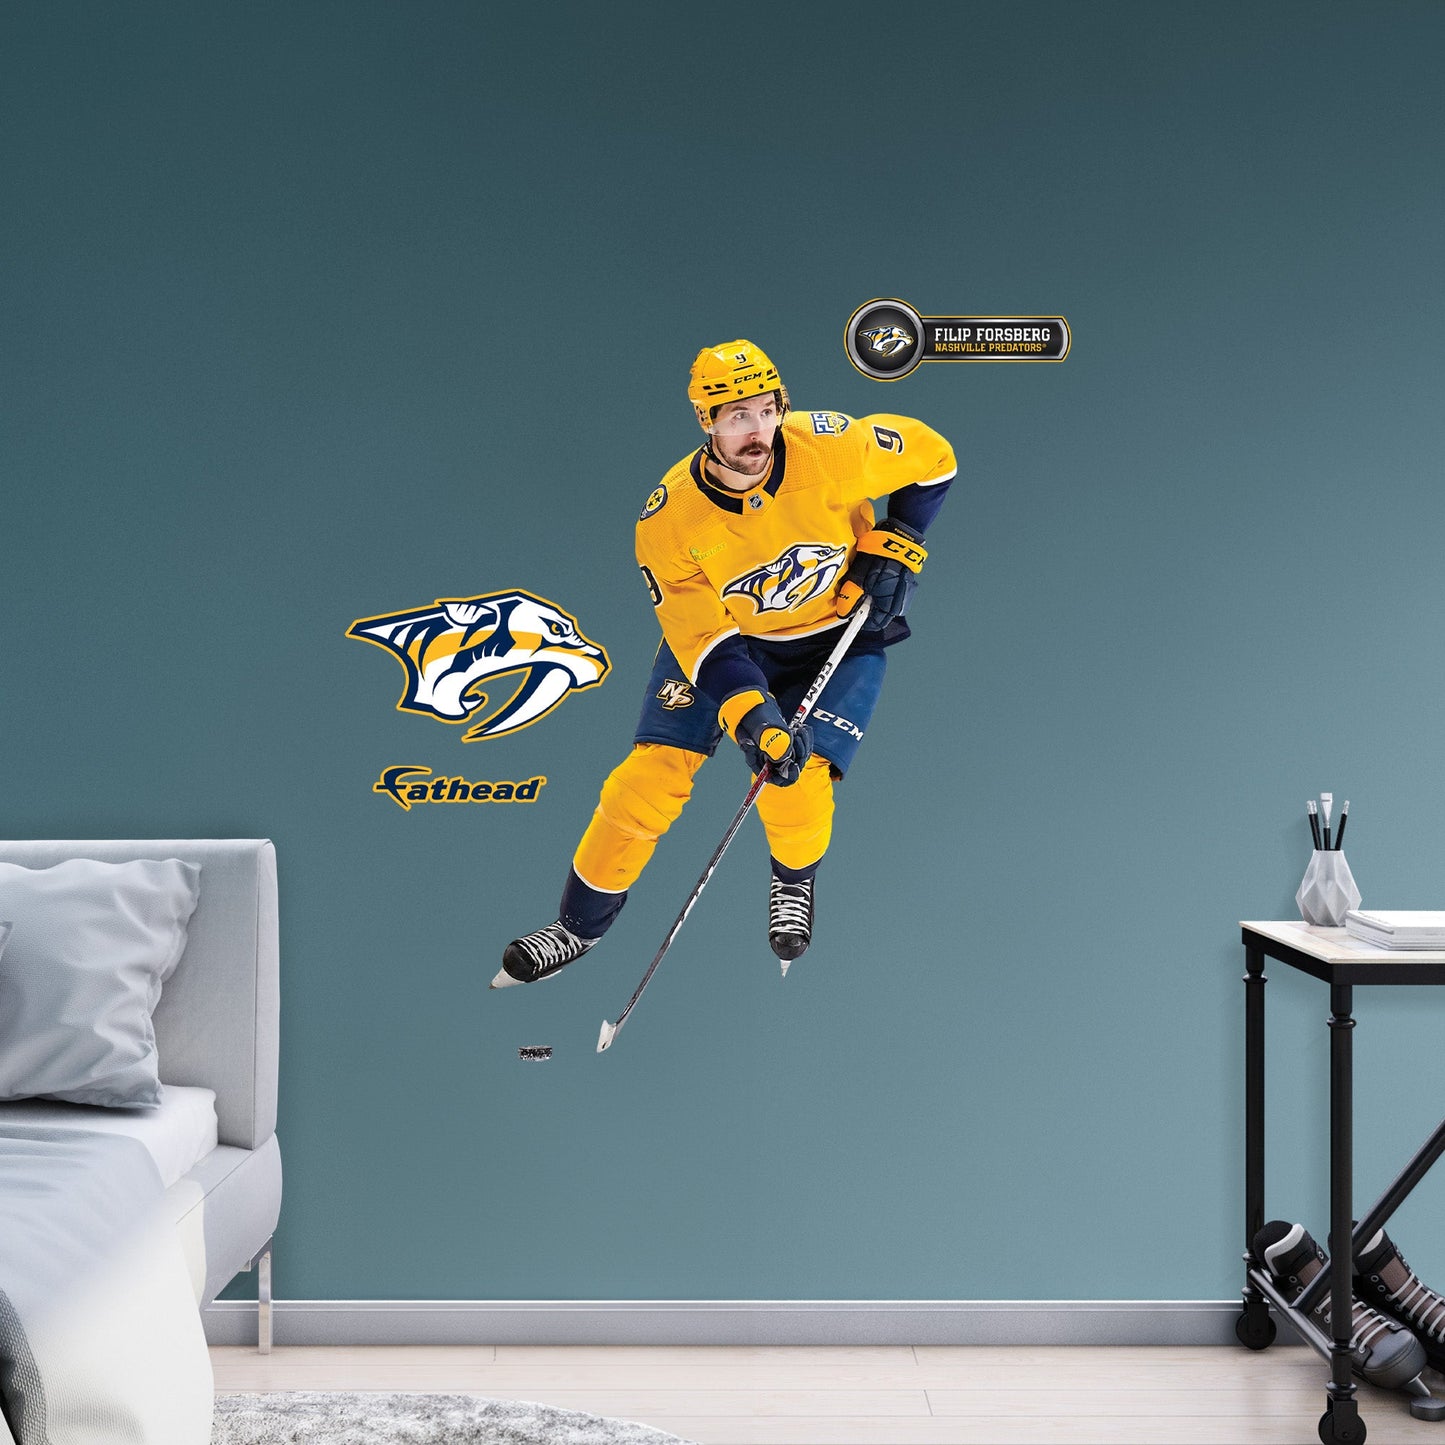 Nashville Predators: Filip Forsberg         - Officially Licensed NHL Removable     Adhesive Decal